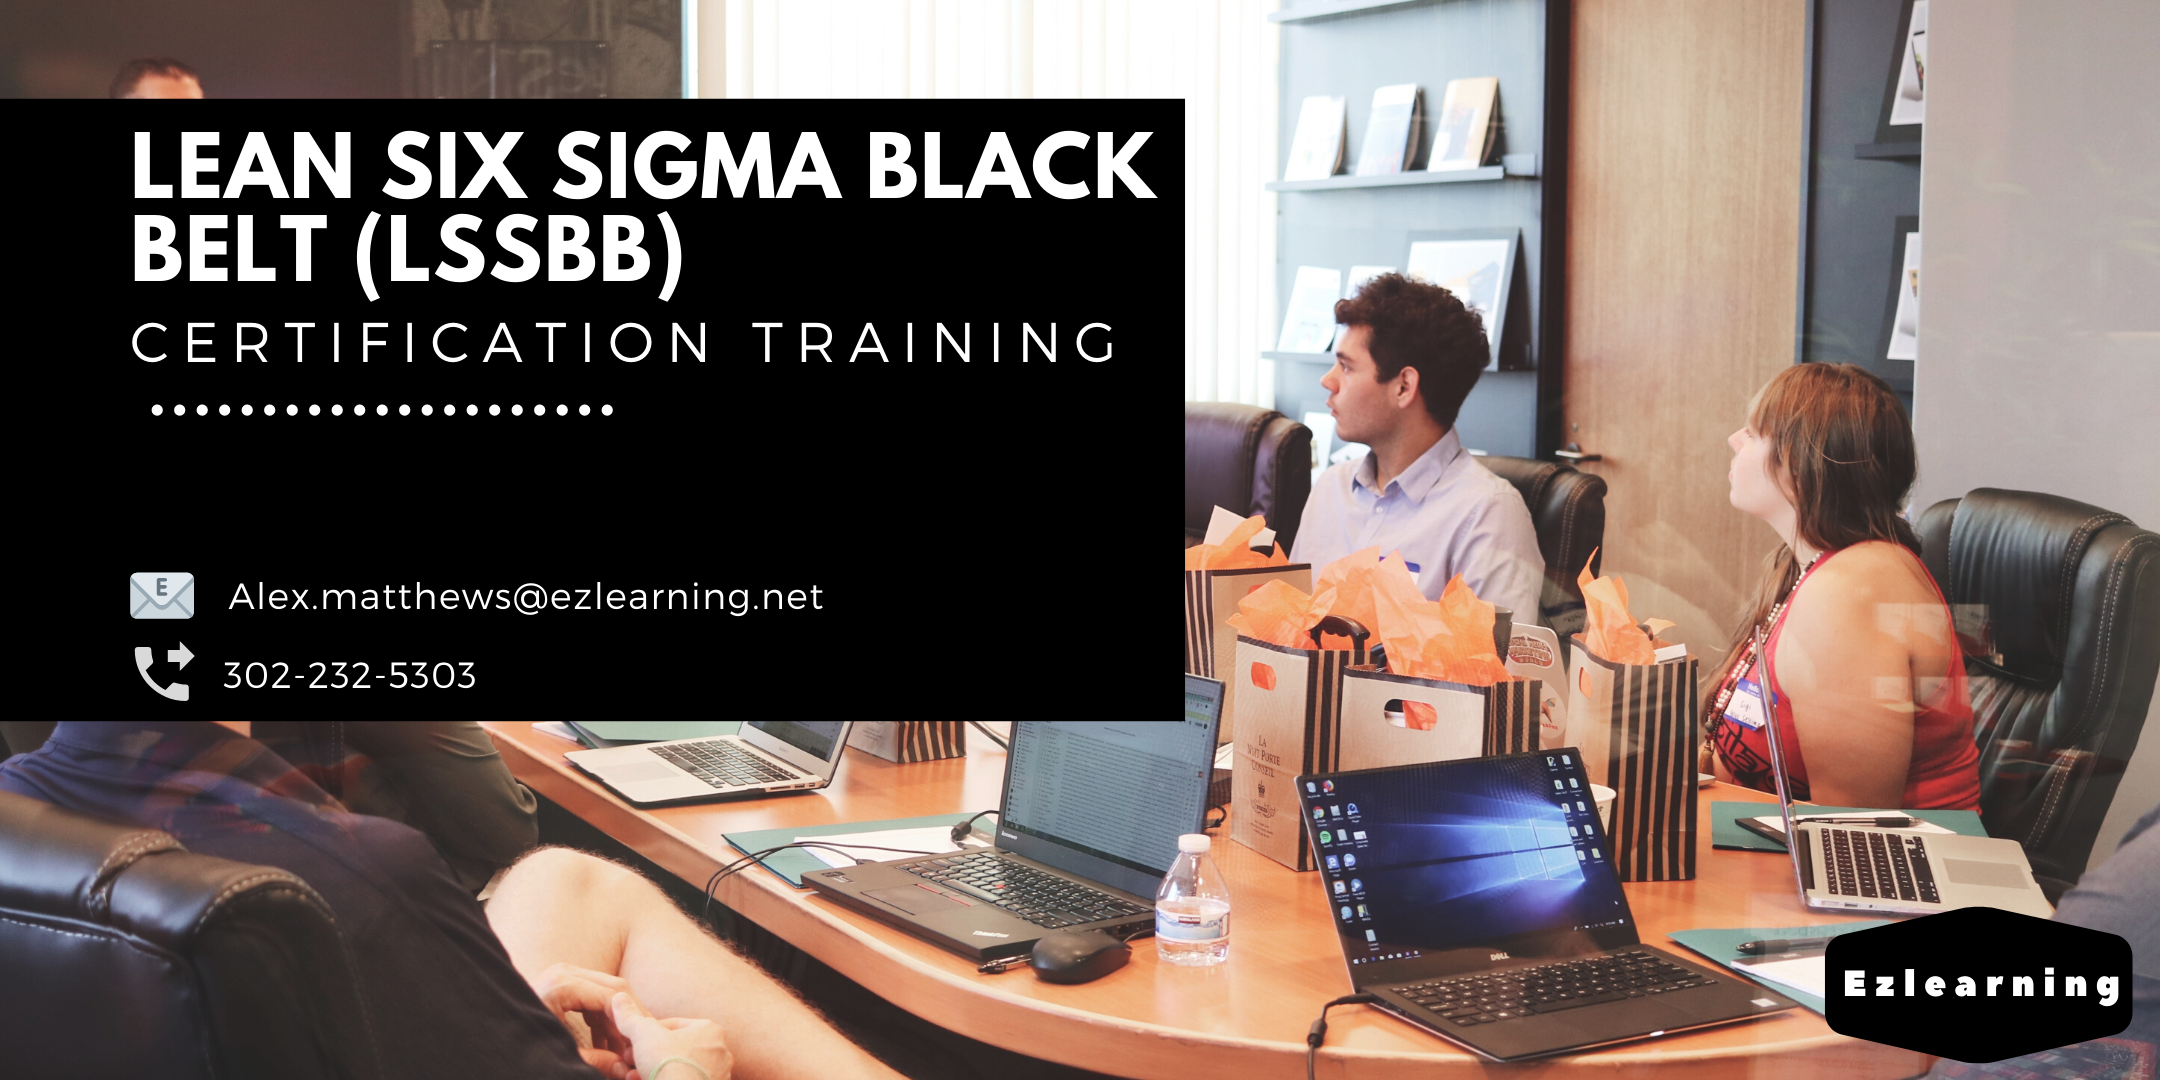 Lean Six Sigma Black Belt Certification Training in St. Louis, MO